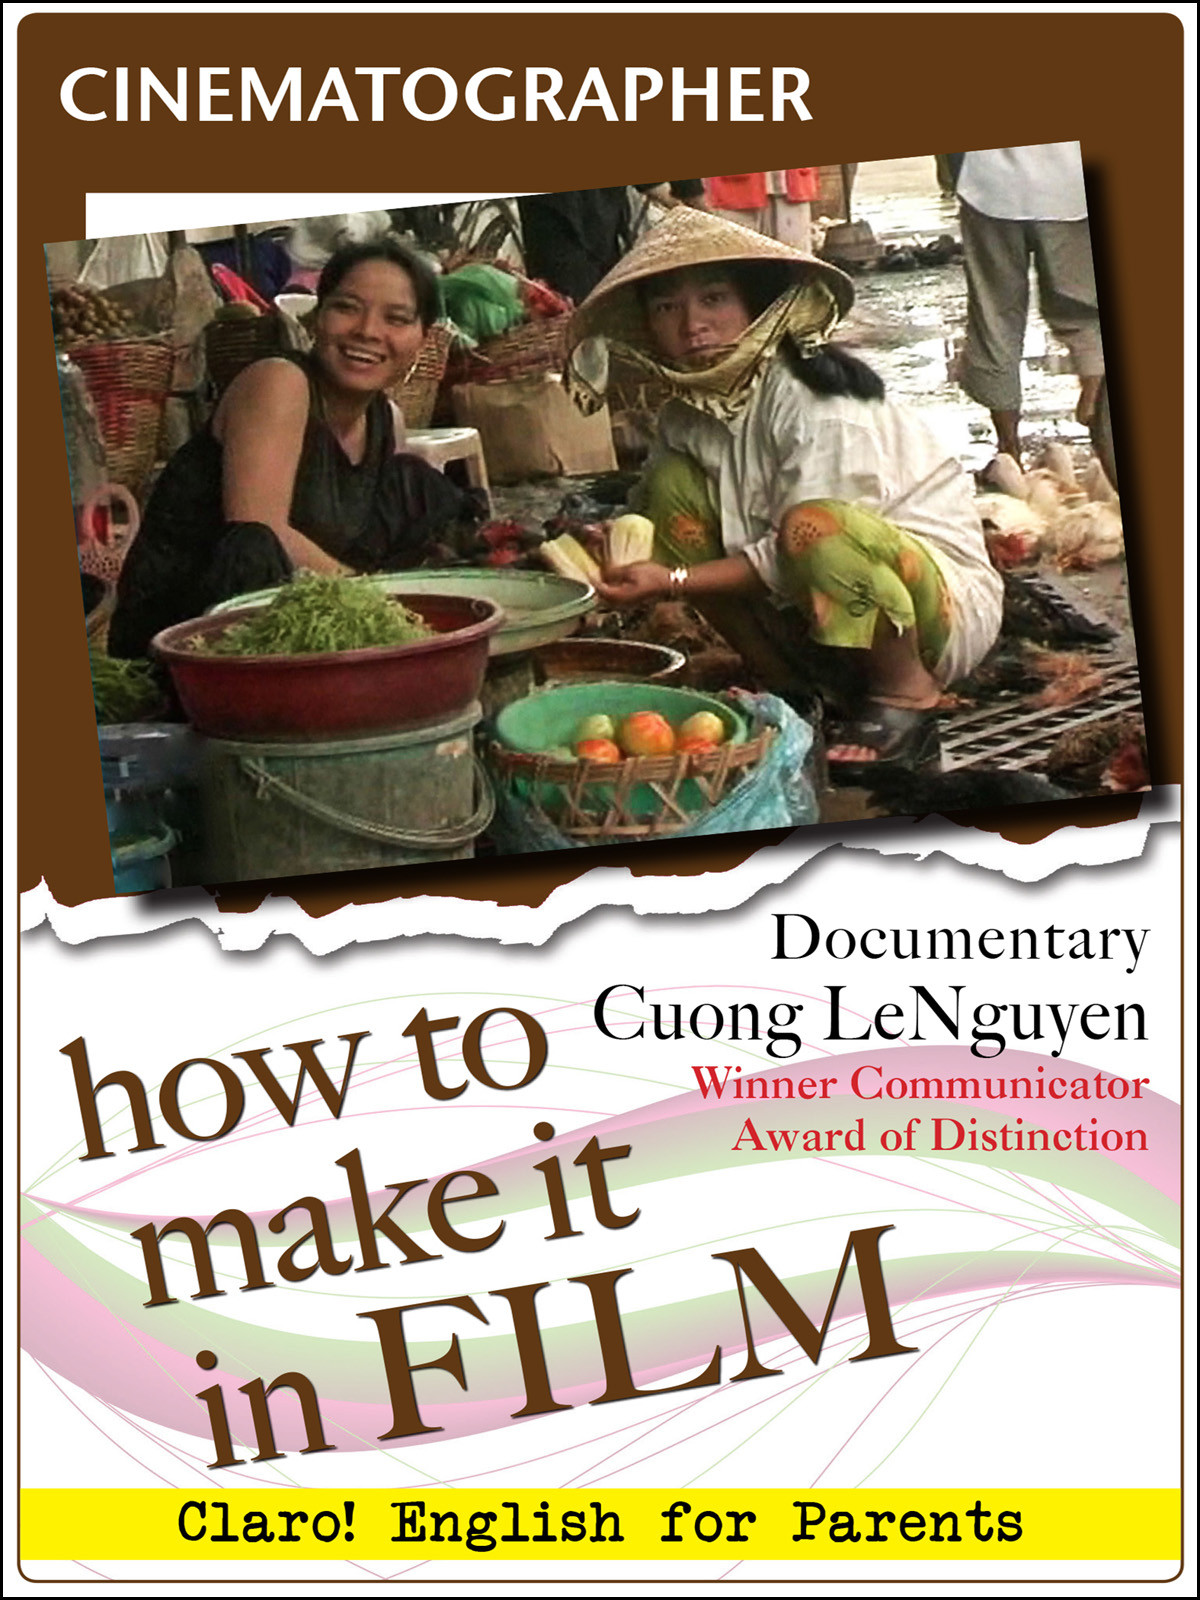 F2863 - Cinematographer Documentary, Comedy & News Cuong LeNguyen